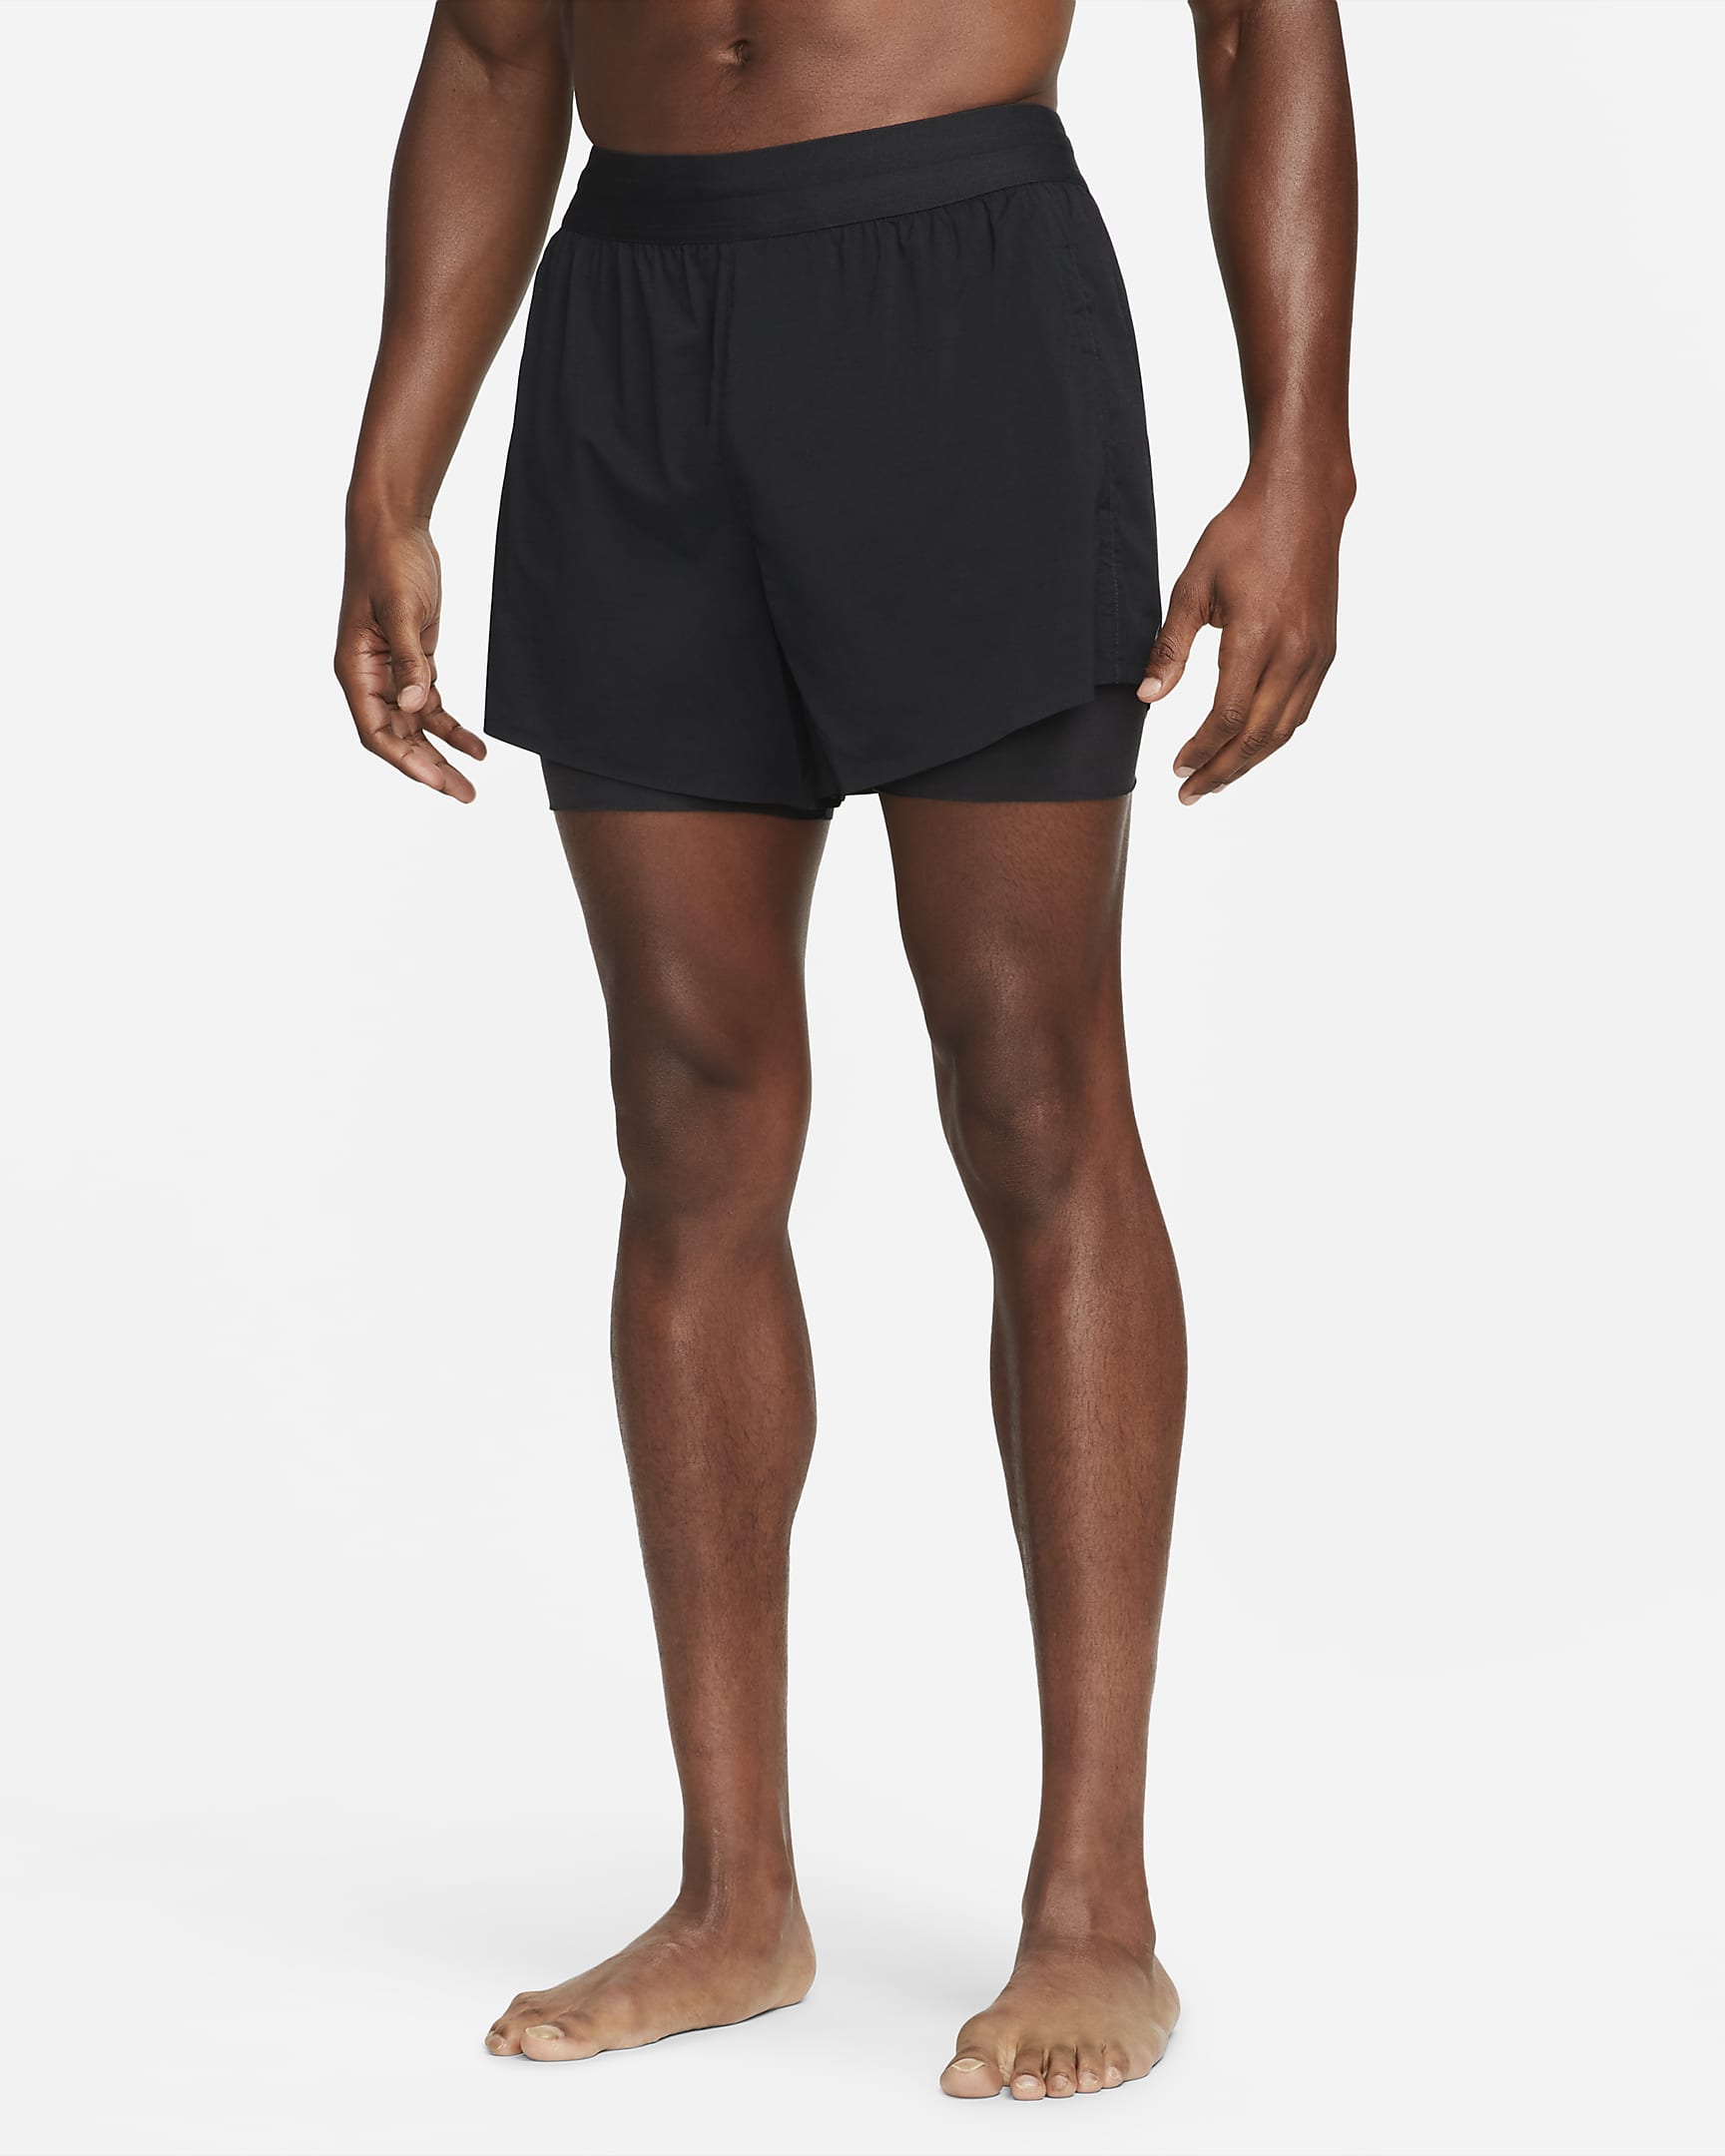 Nike Yoga Men\'s Hot Yoga Shorts Black/Black/Iron Grey